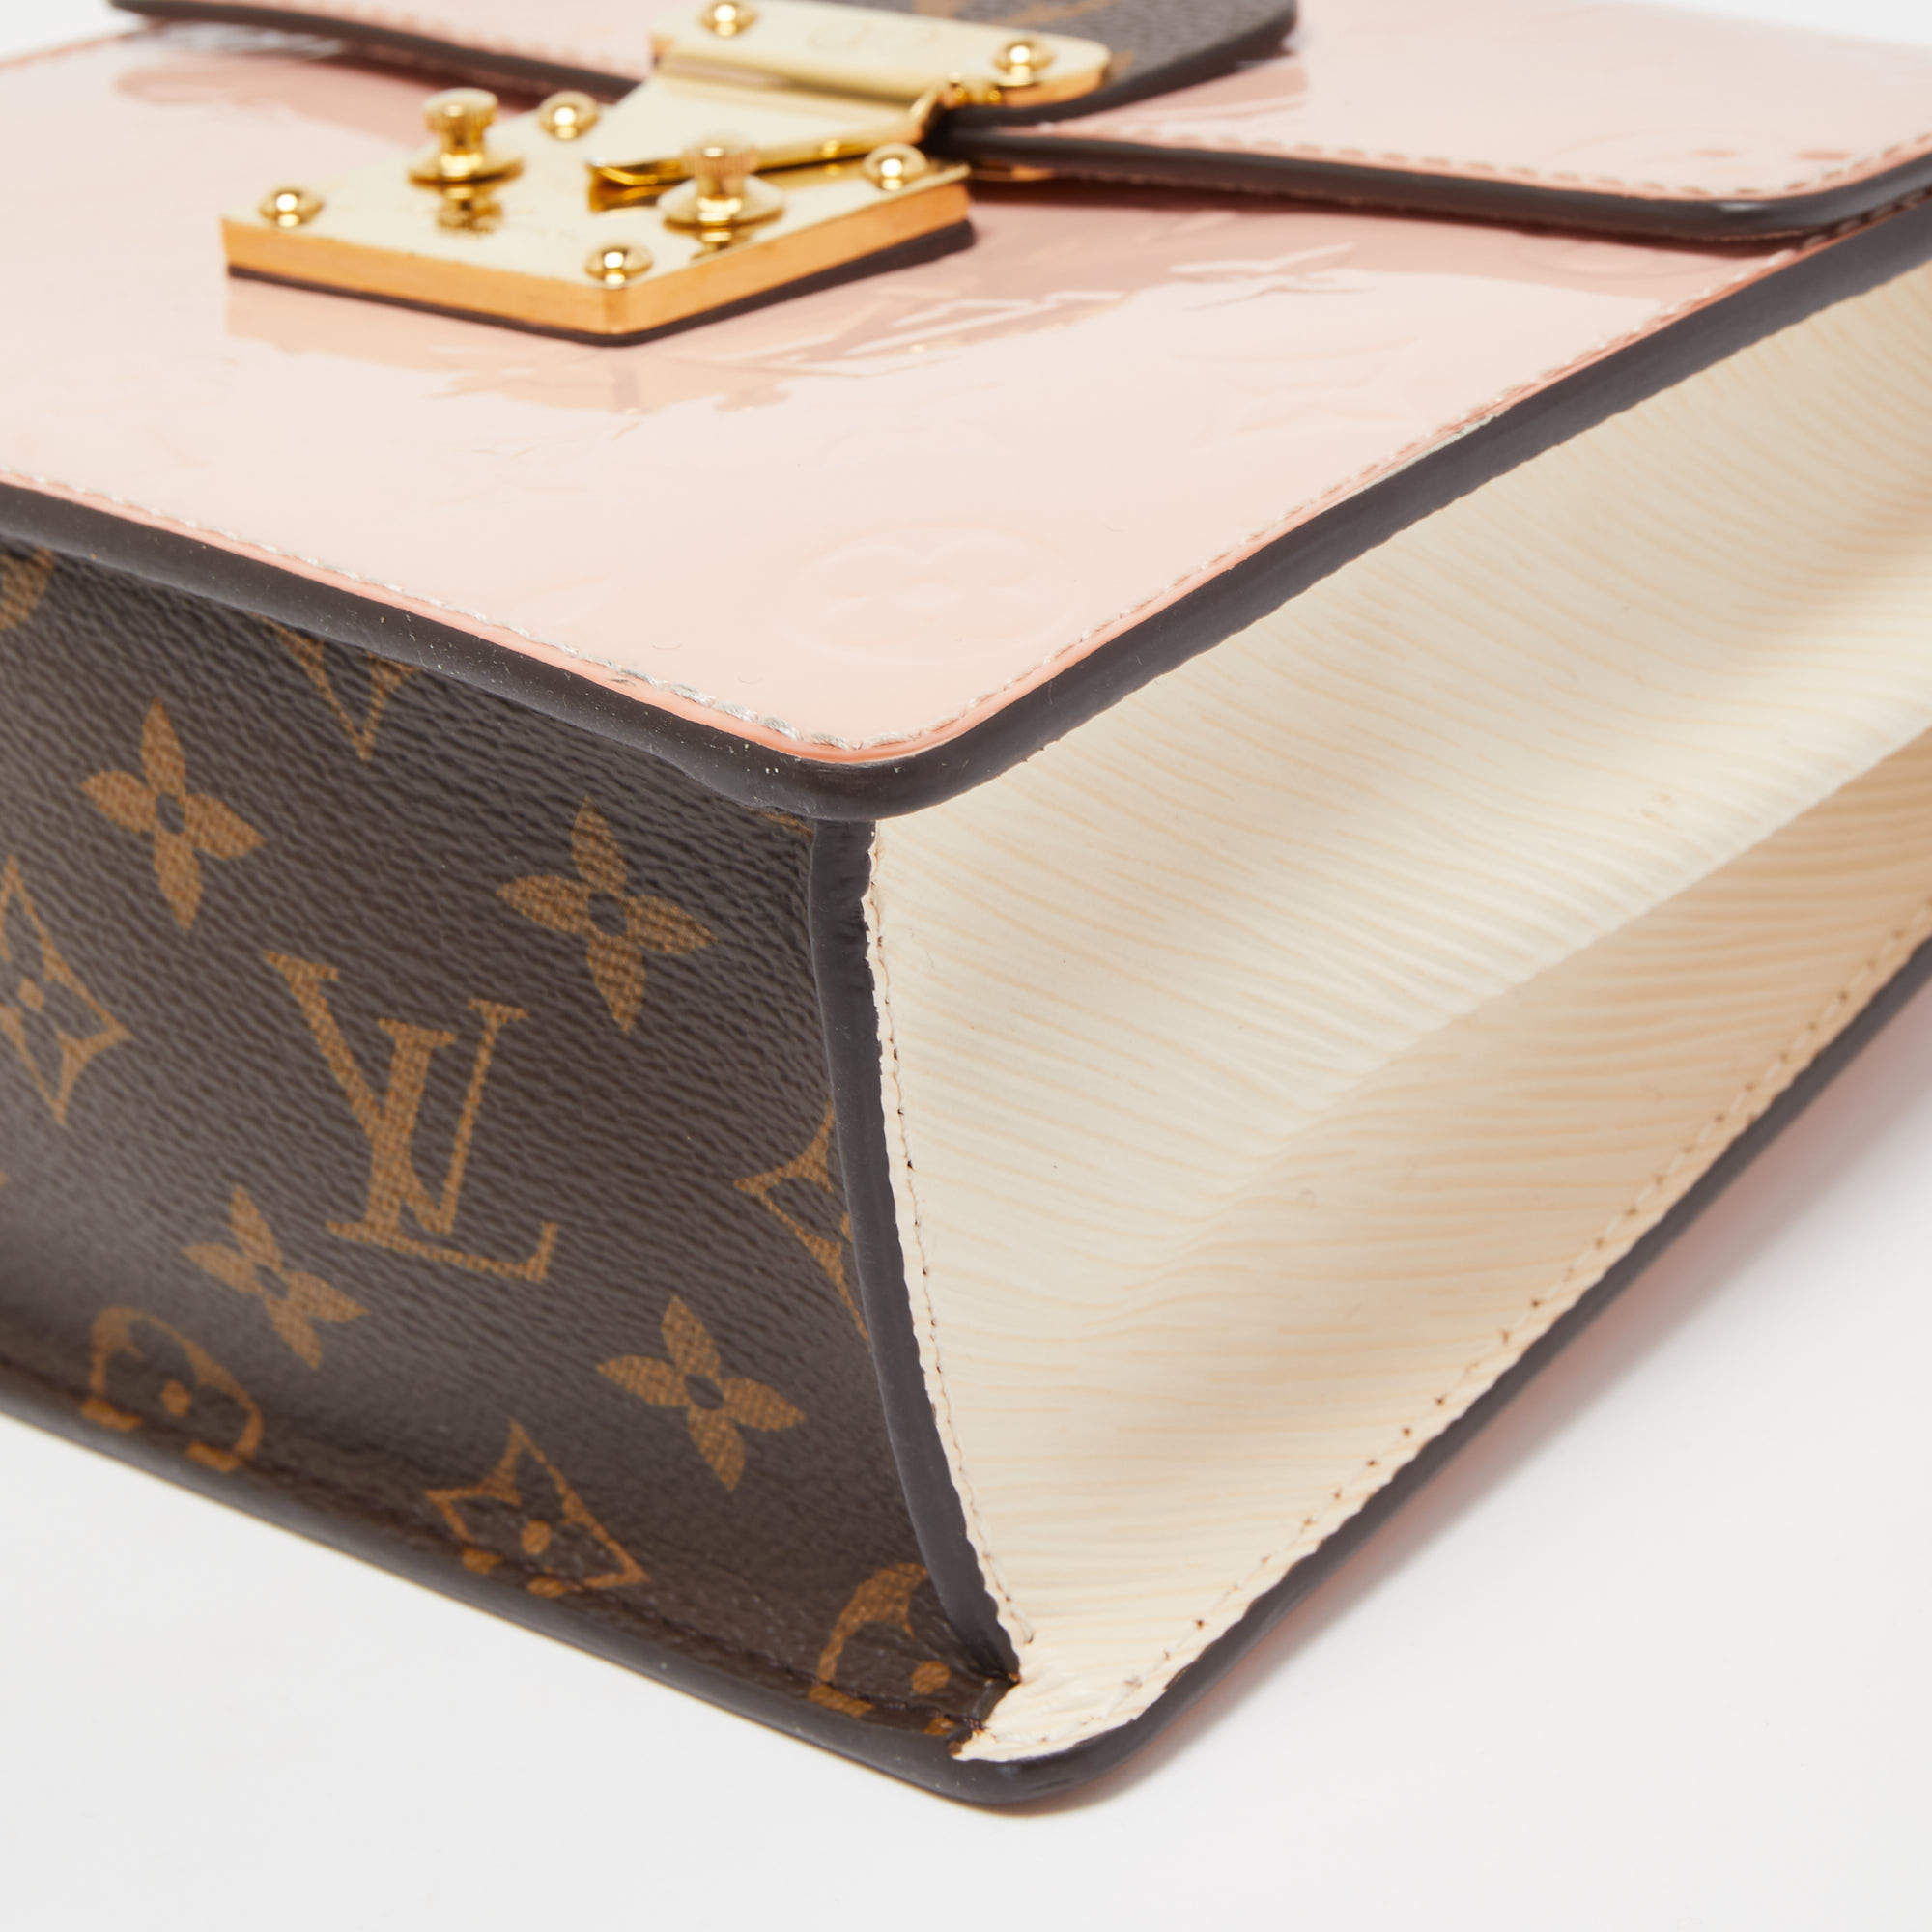 Louis Vuitton Marsmallow Monogram Vernis Spring Street Bag Louis Vuitton